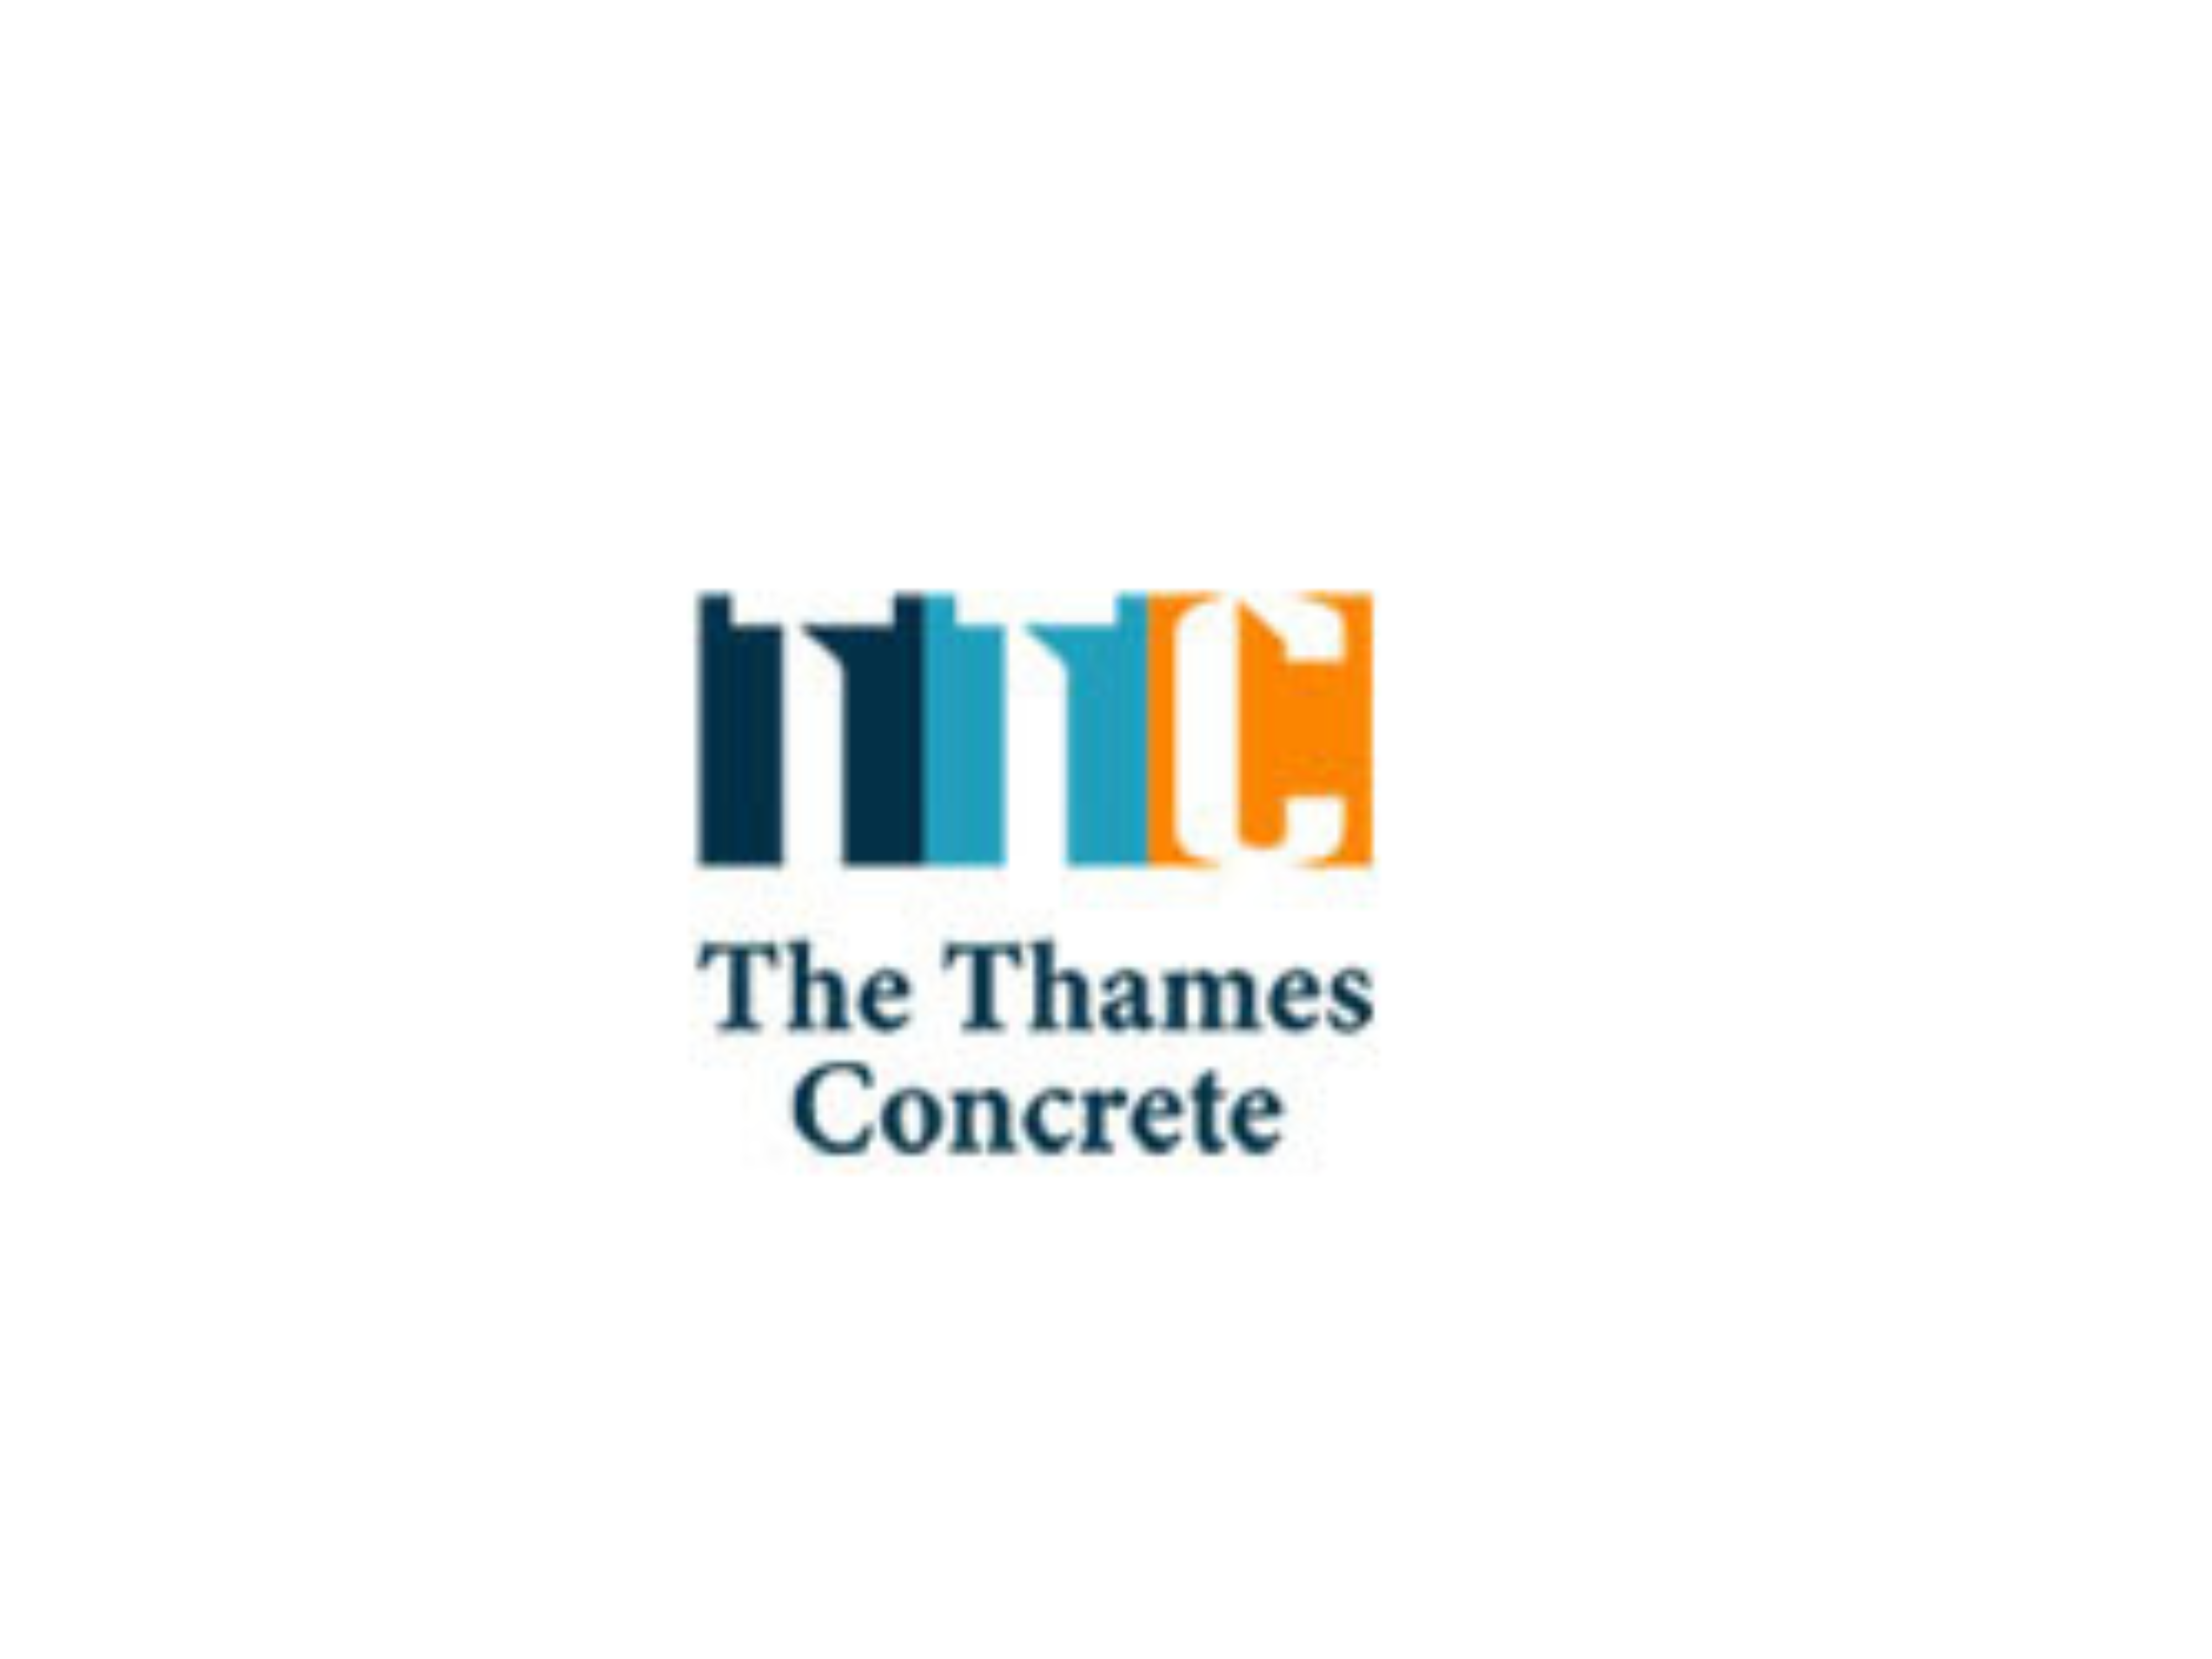 Company The Thames Concrete. Description and contact information.